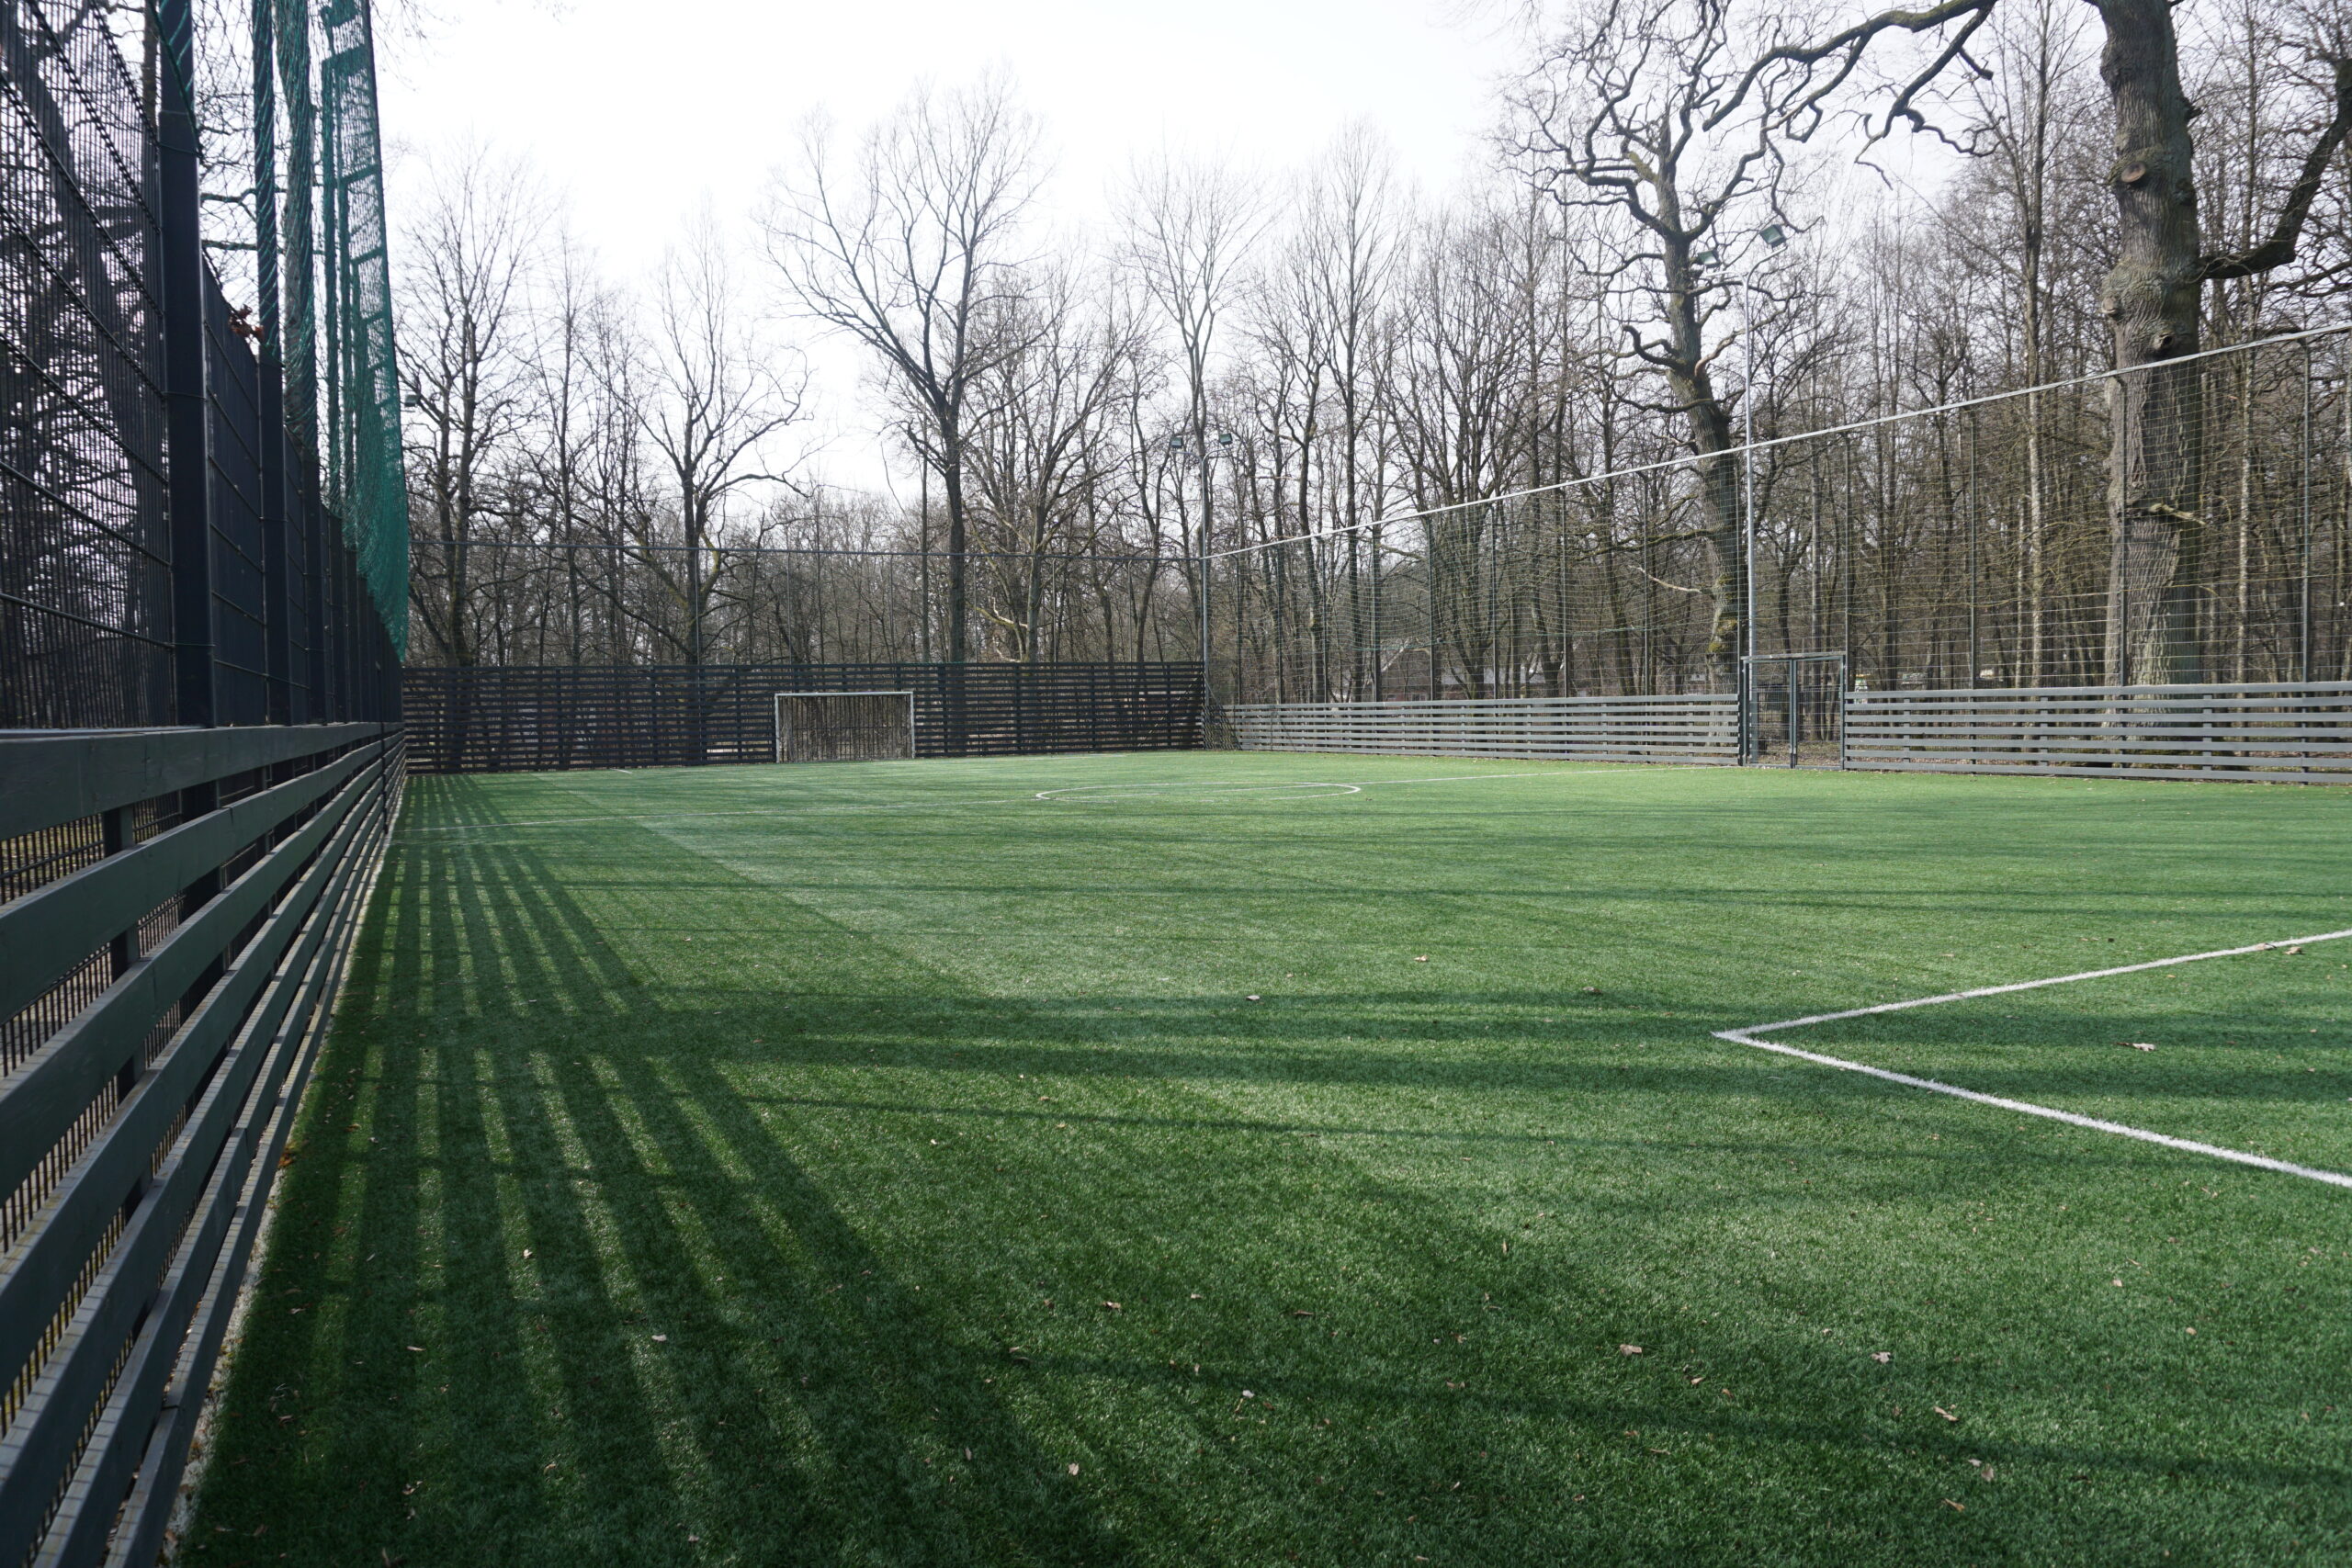 Outdoor artificial surface football field No. 2